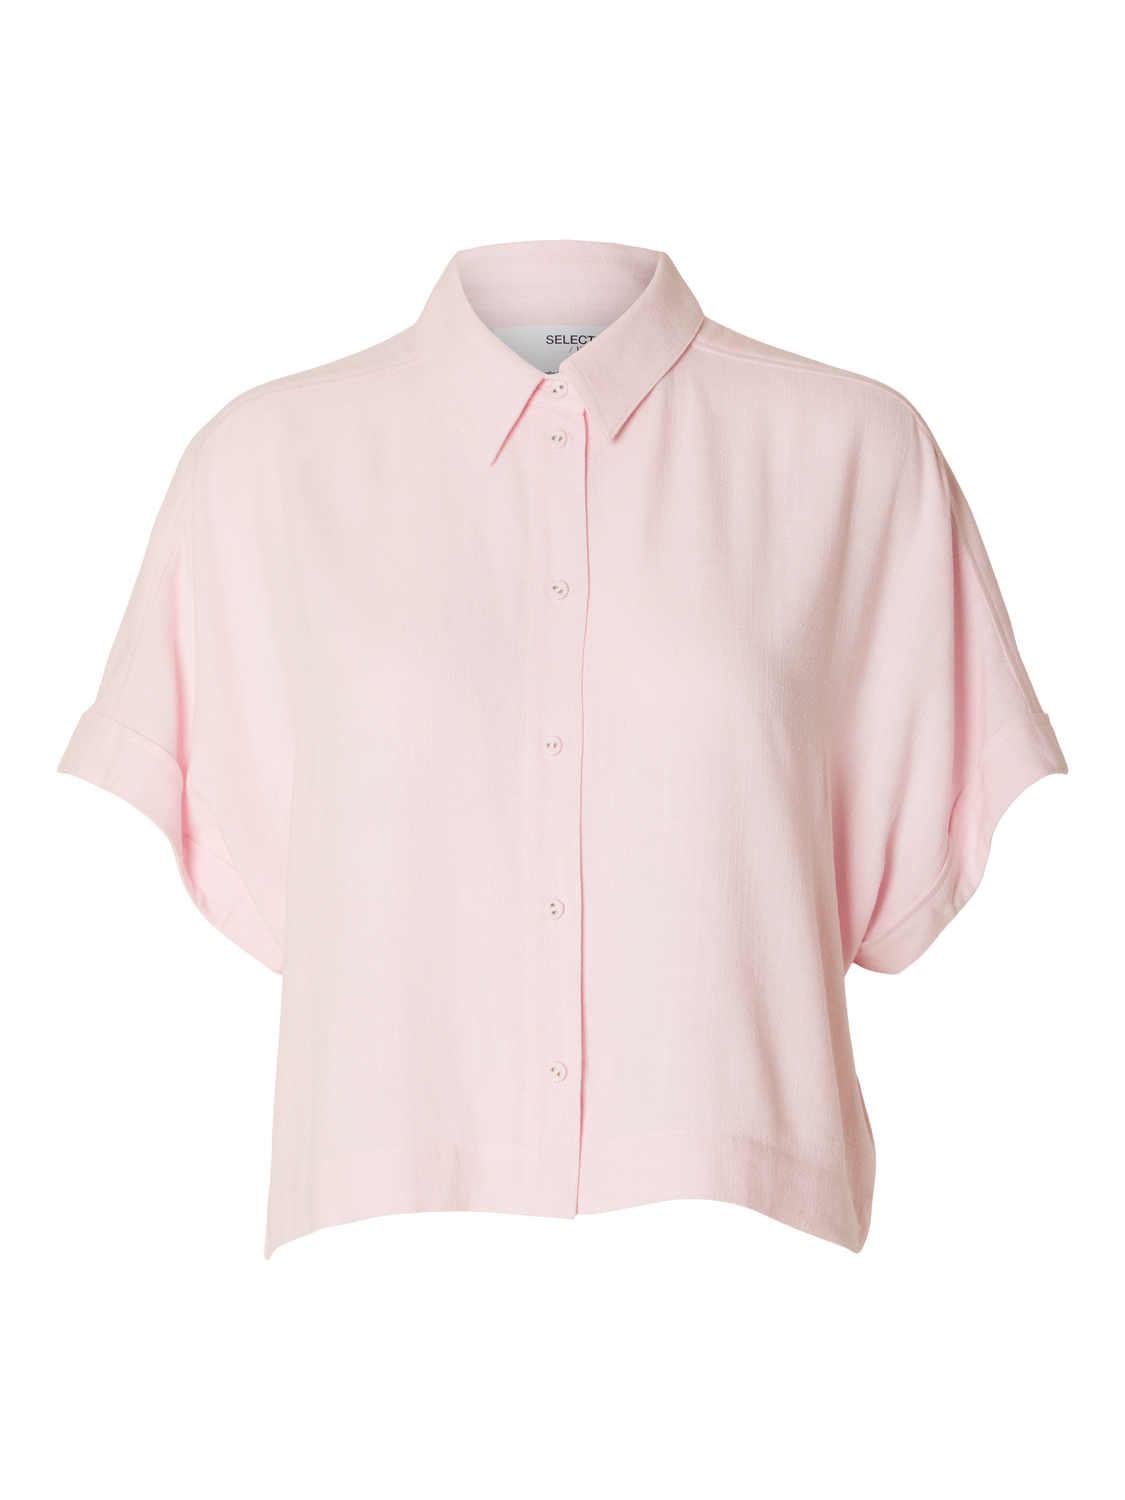 SLFVIVA Shirts - Cradle Pink